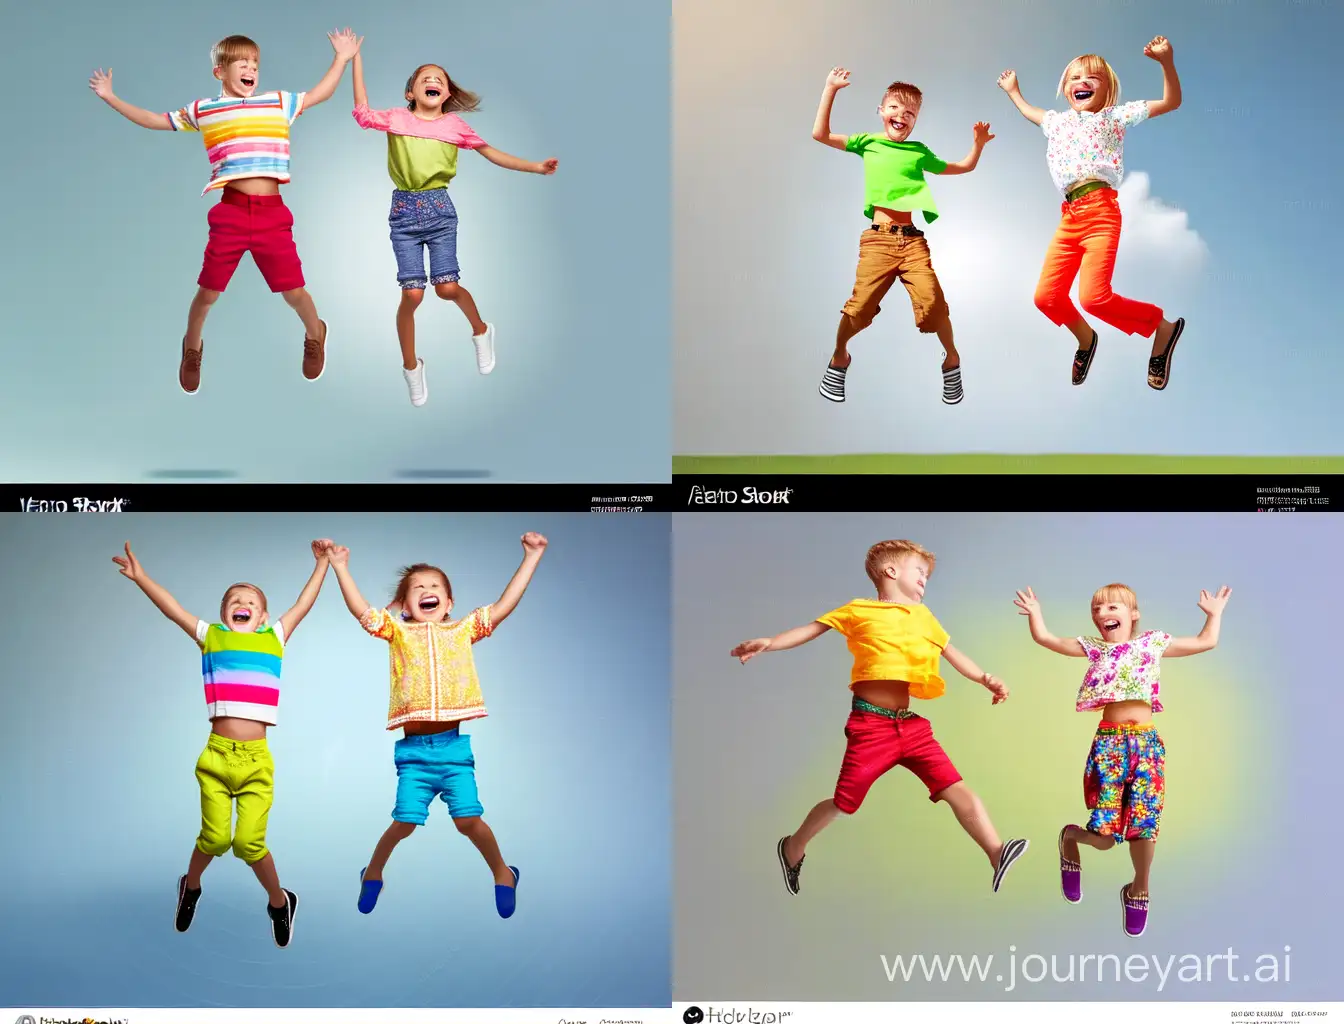 Joyful-Summer-Fun-Vibrant-Children-Jumping-in-Bright-Summer-Clothes